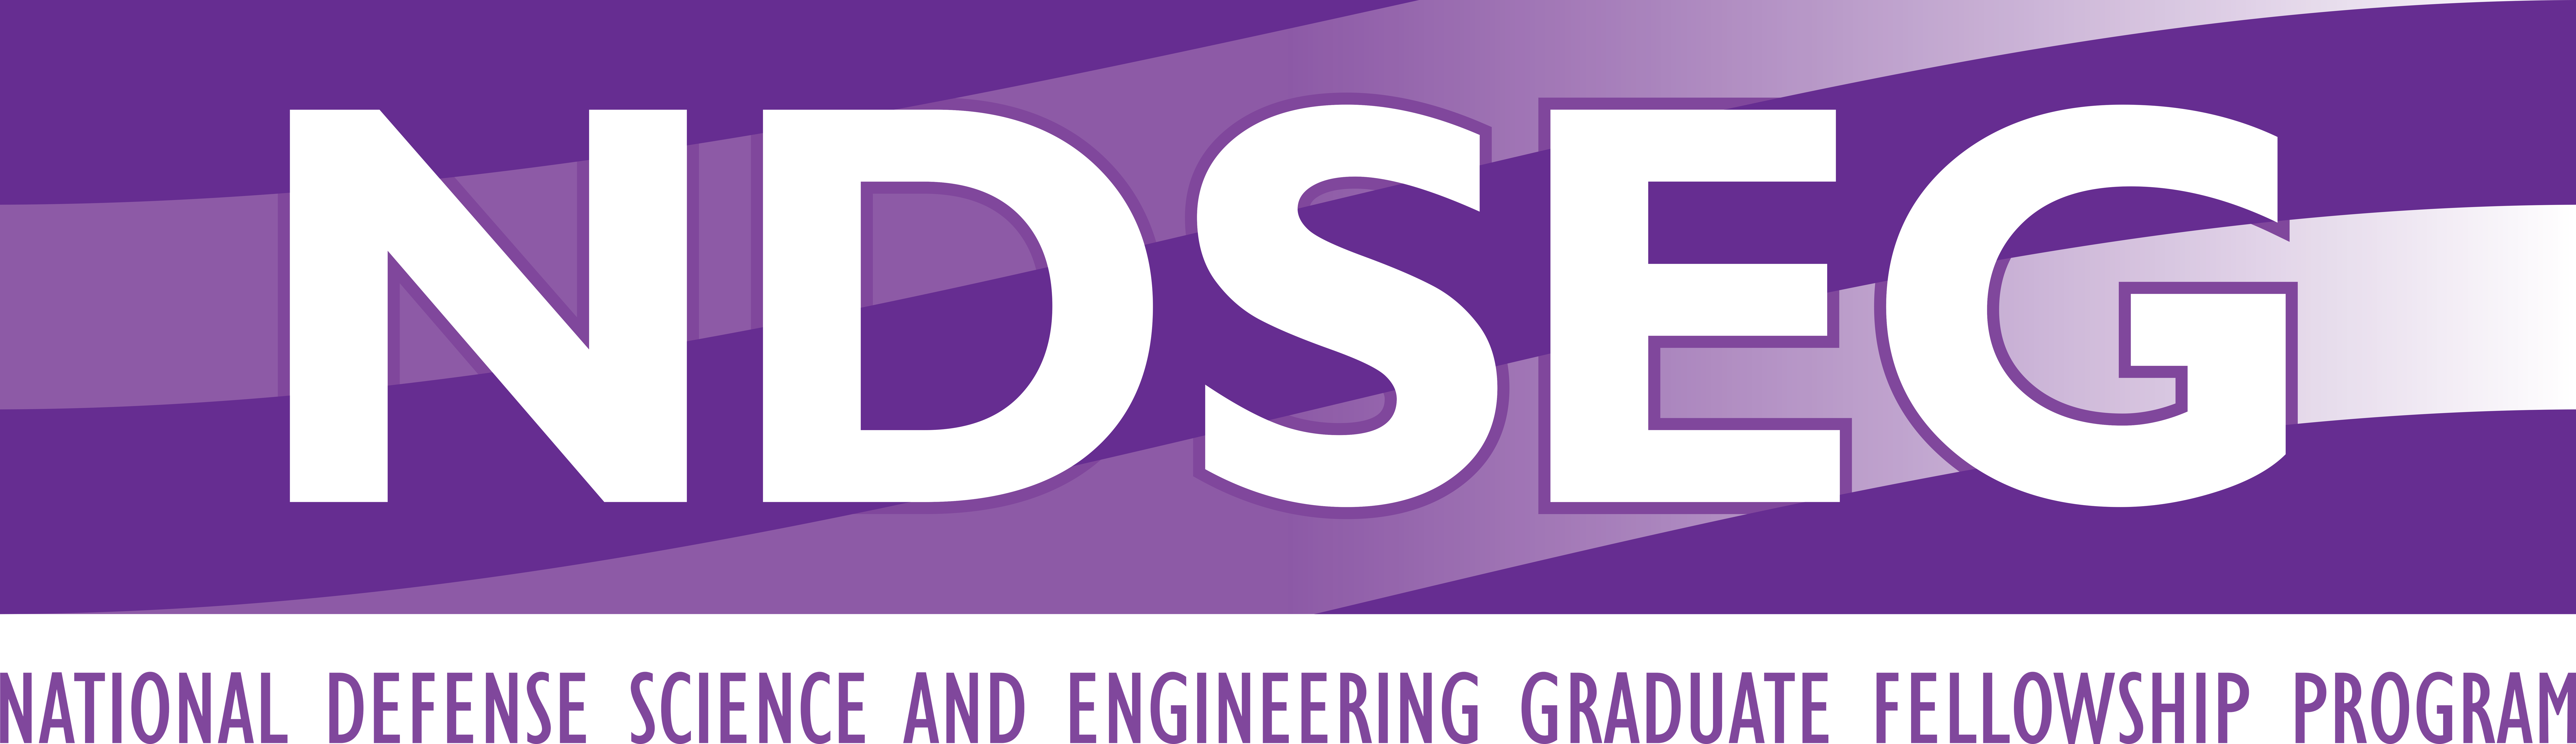 National Defense Science and Engineering Graduate (NDSEG) Fellowship Program logo